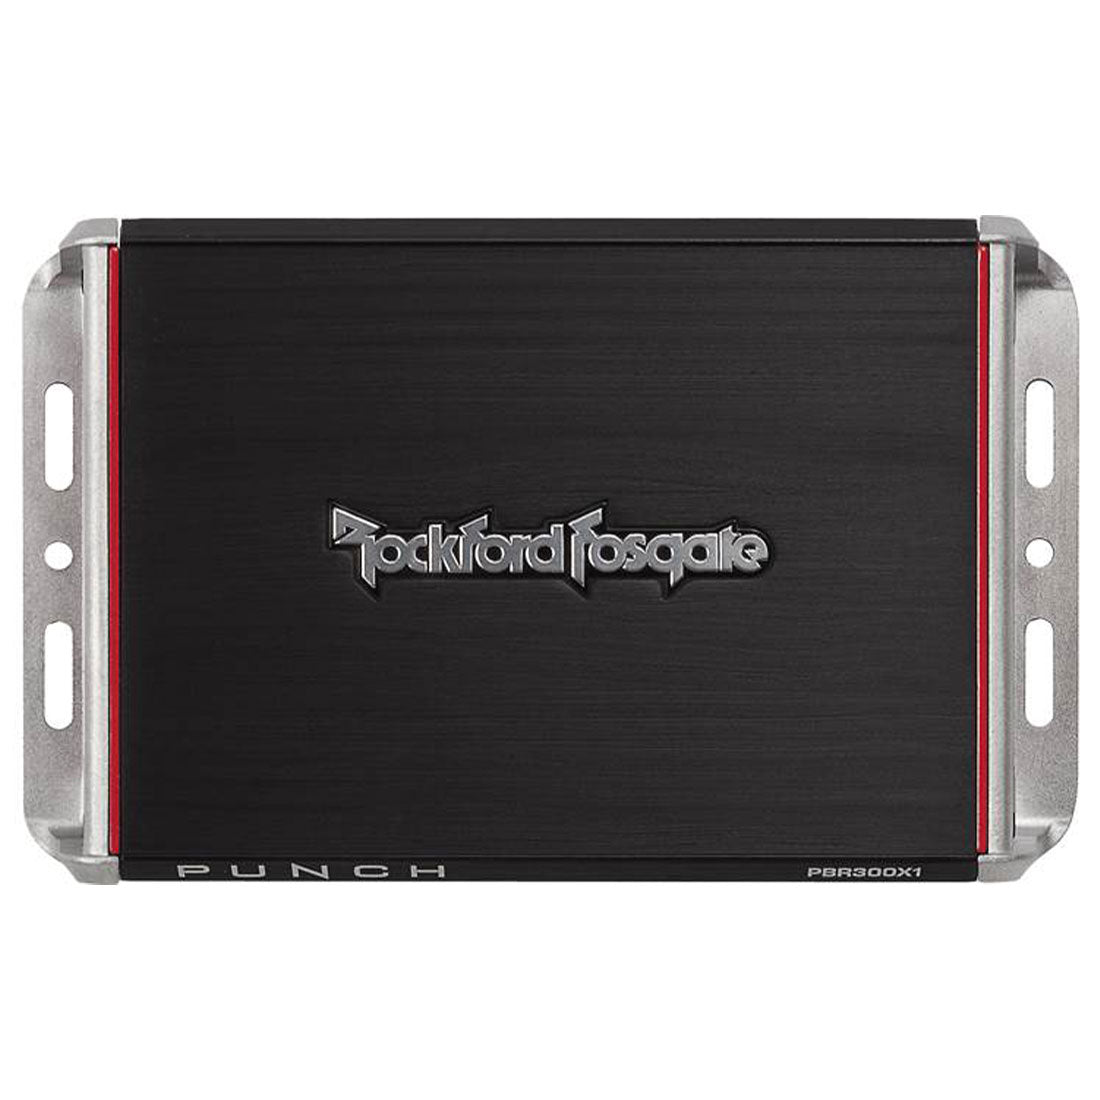 Rockford Fosgate PBR300X1 main 